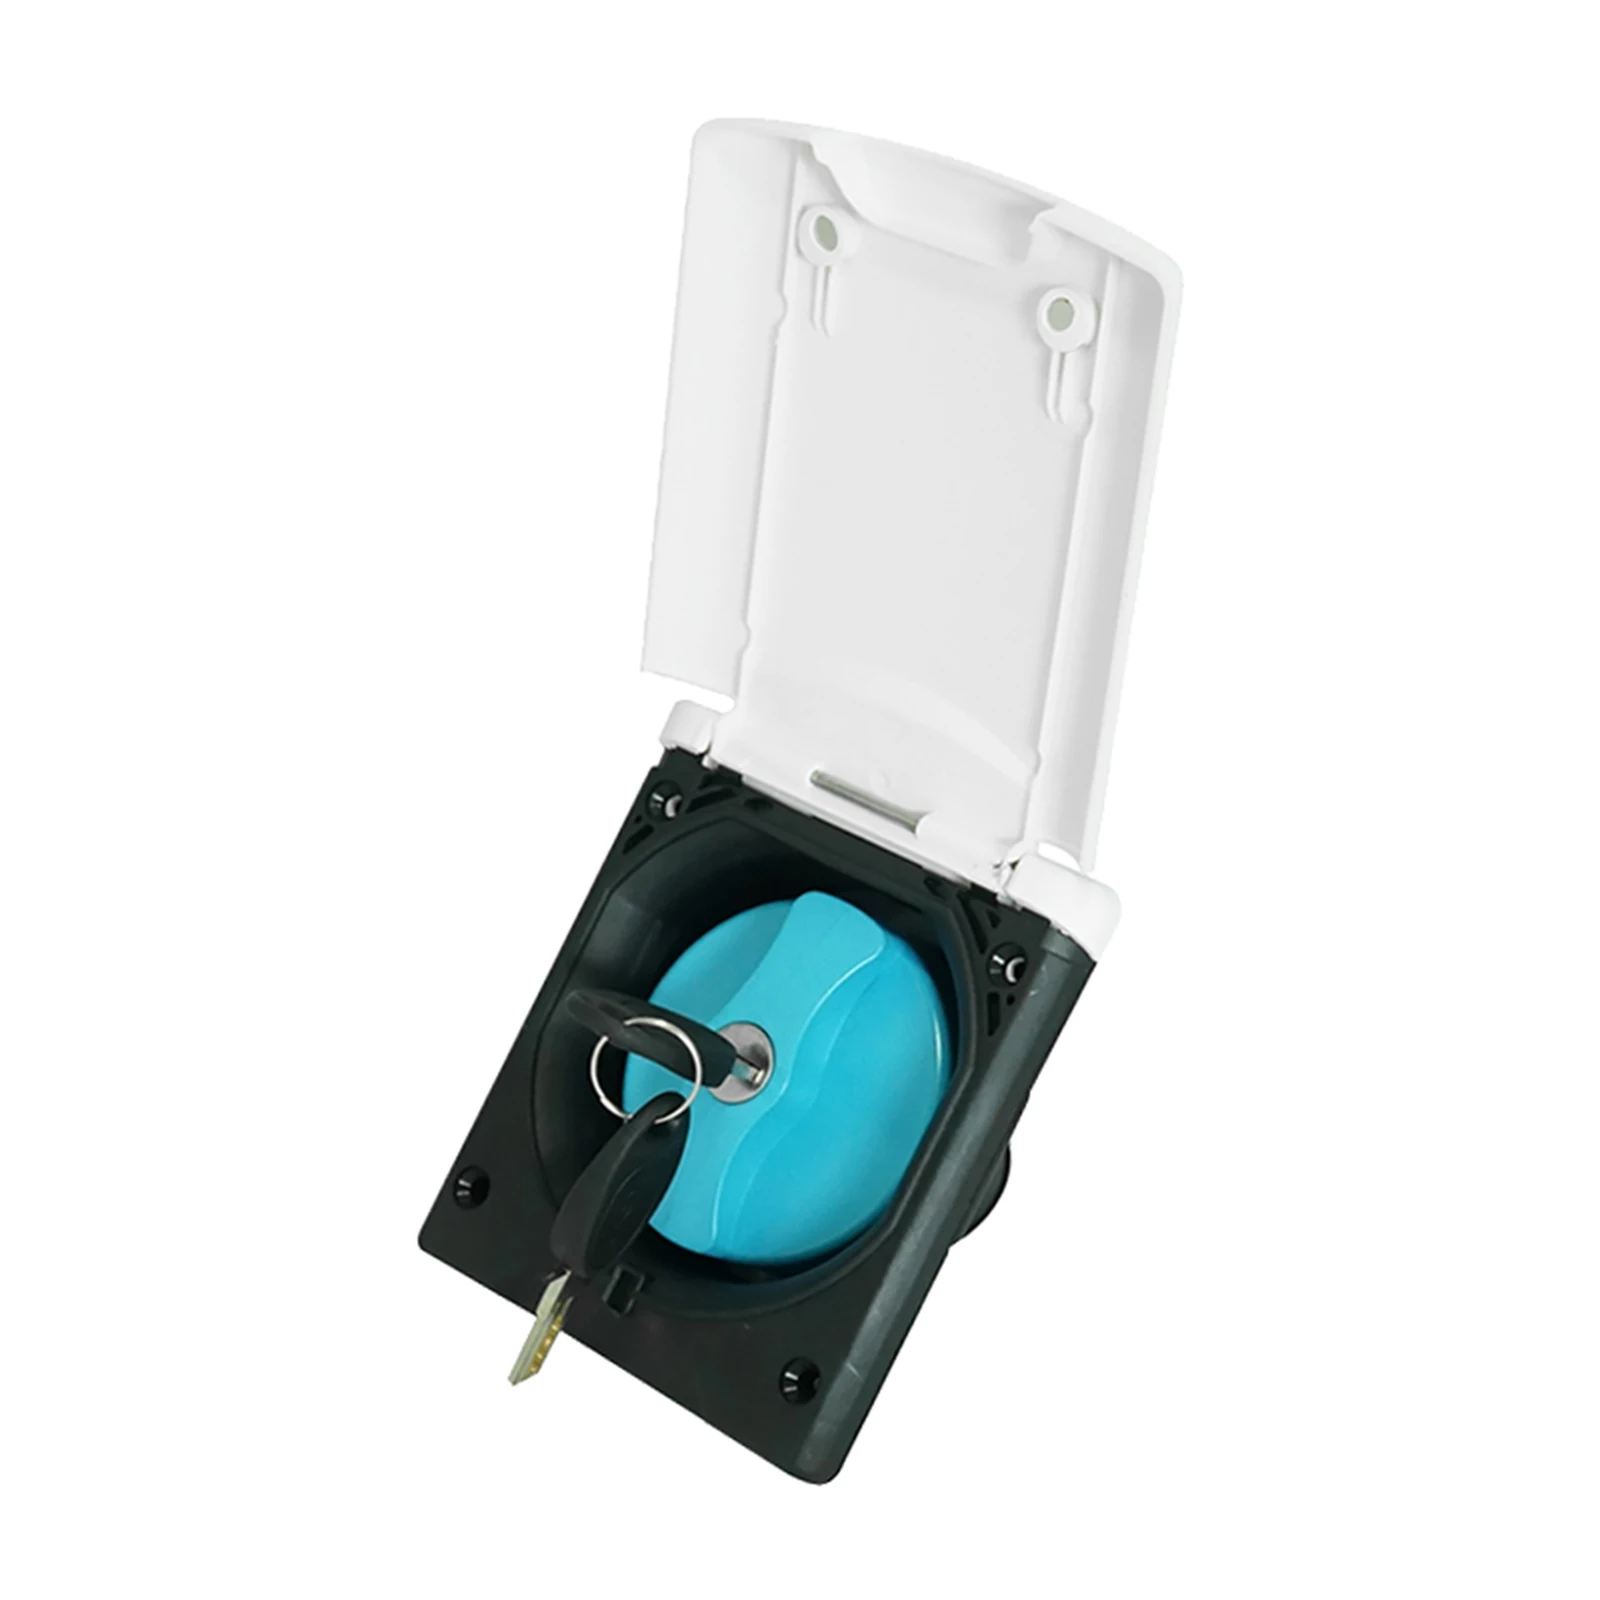 Trailer RV Camper Gravity Water Inlet Hatch Lock with Keys Durable Premium